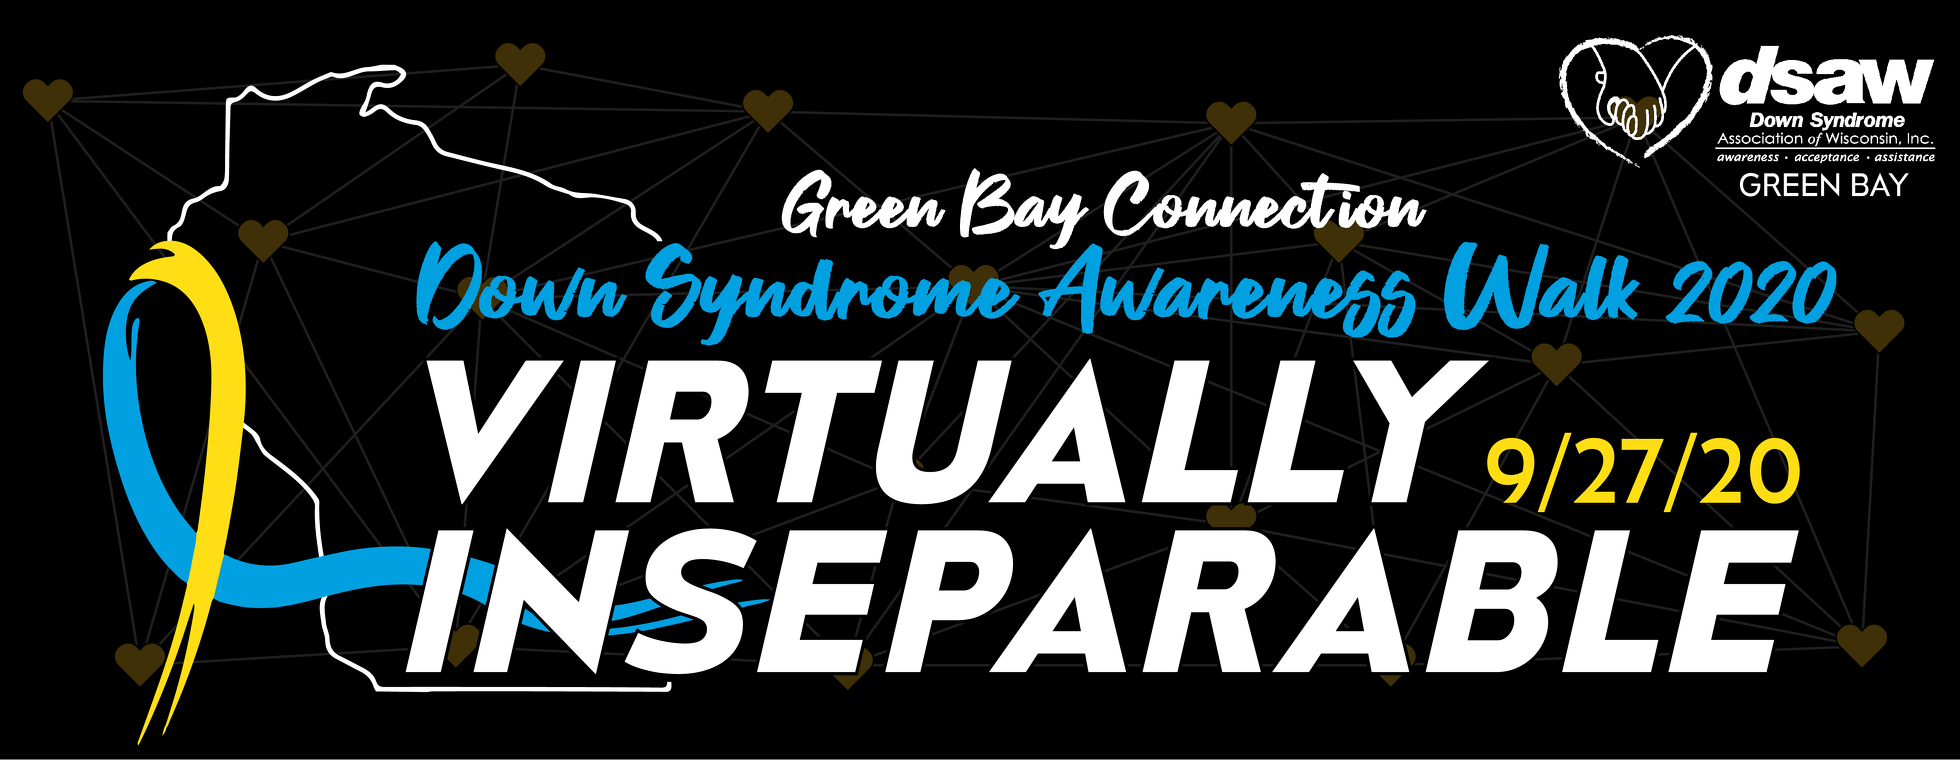 Green Bay Down Syndrome Awareness Walk 2020 